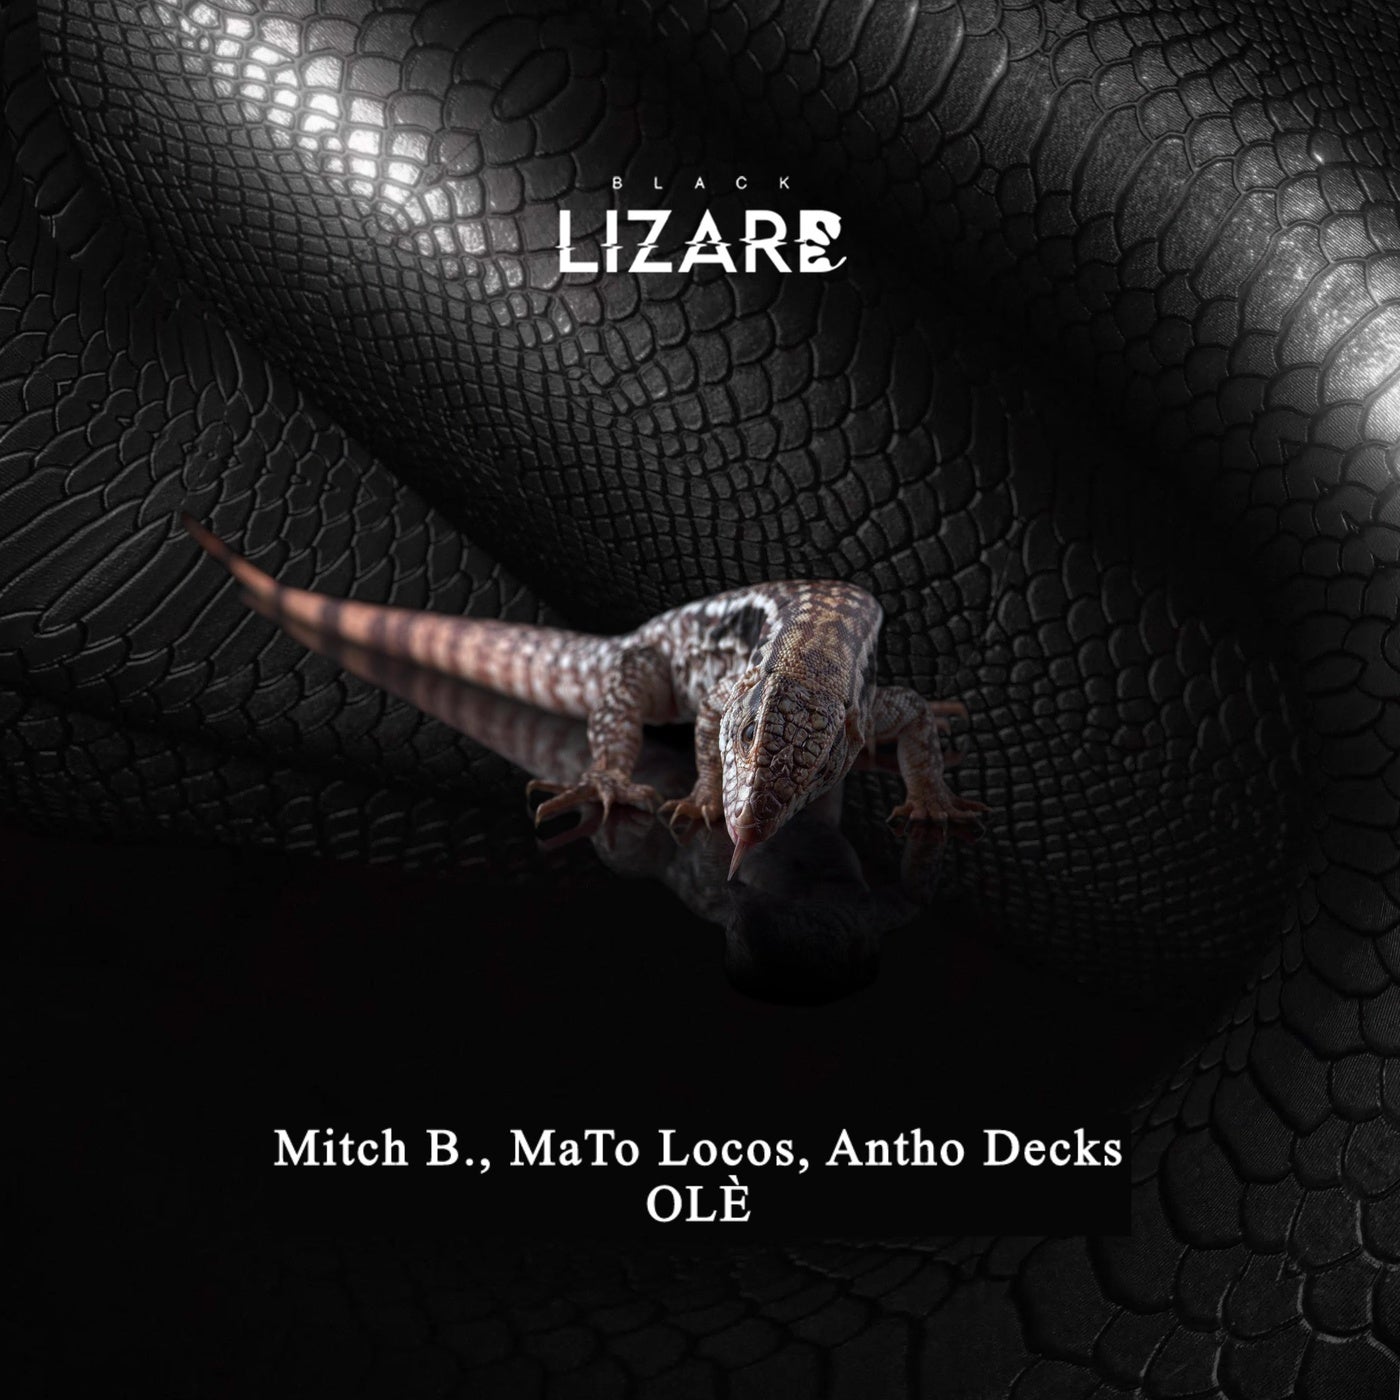 Cover - Antho Decks, Mato Locos, Mitch B. - Olè (Original Mix)